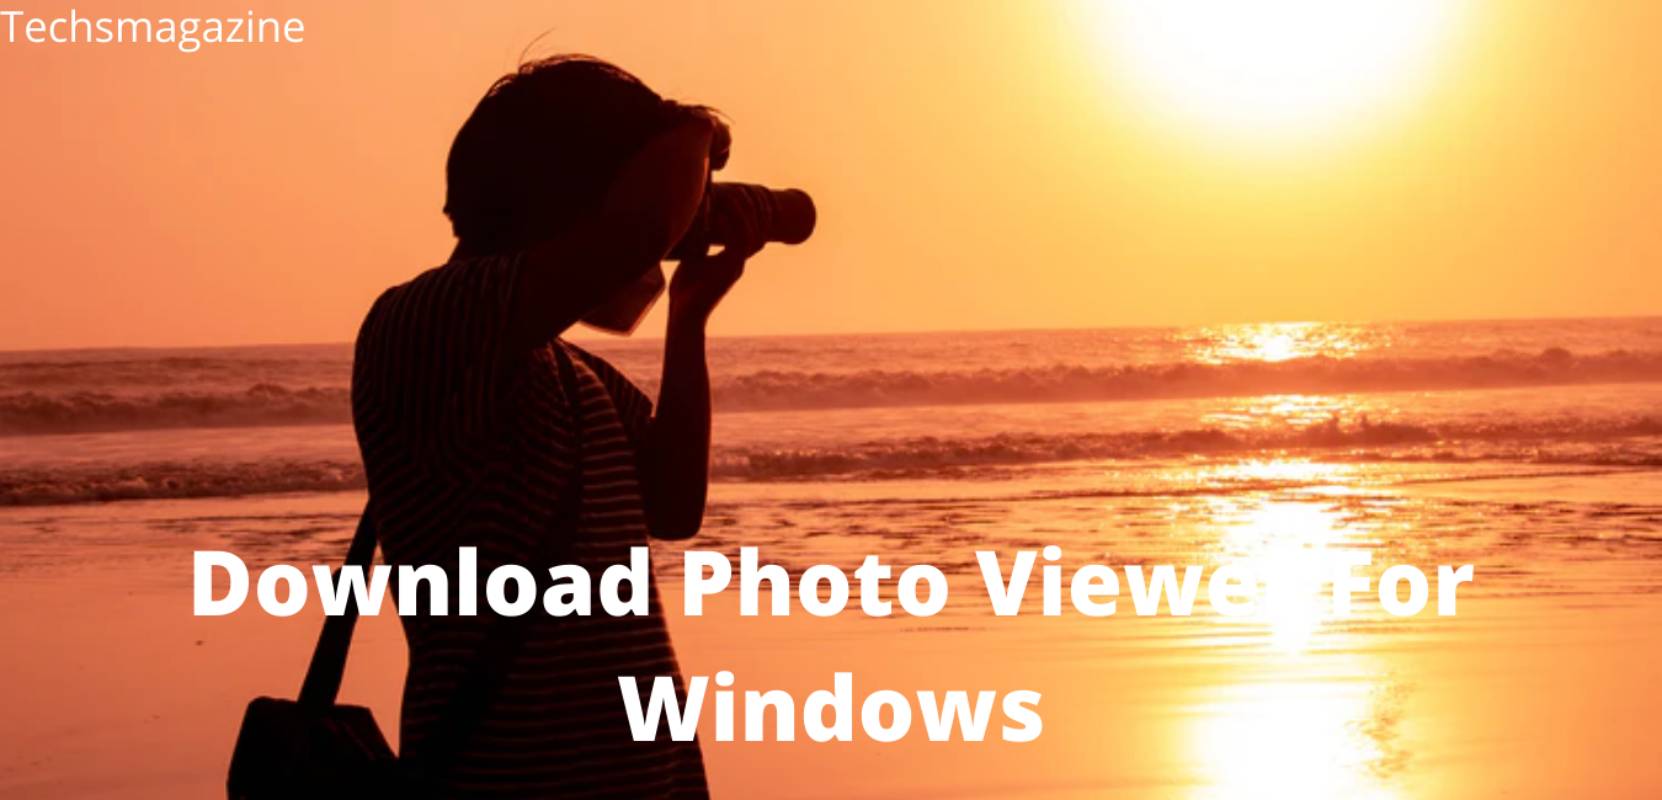 Download Photo Viewer For Windowshttps://techsmagazine.com/